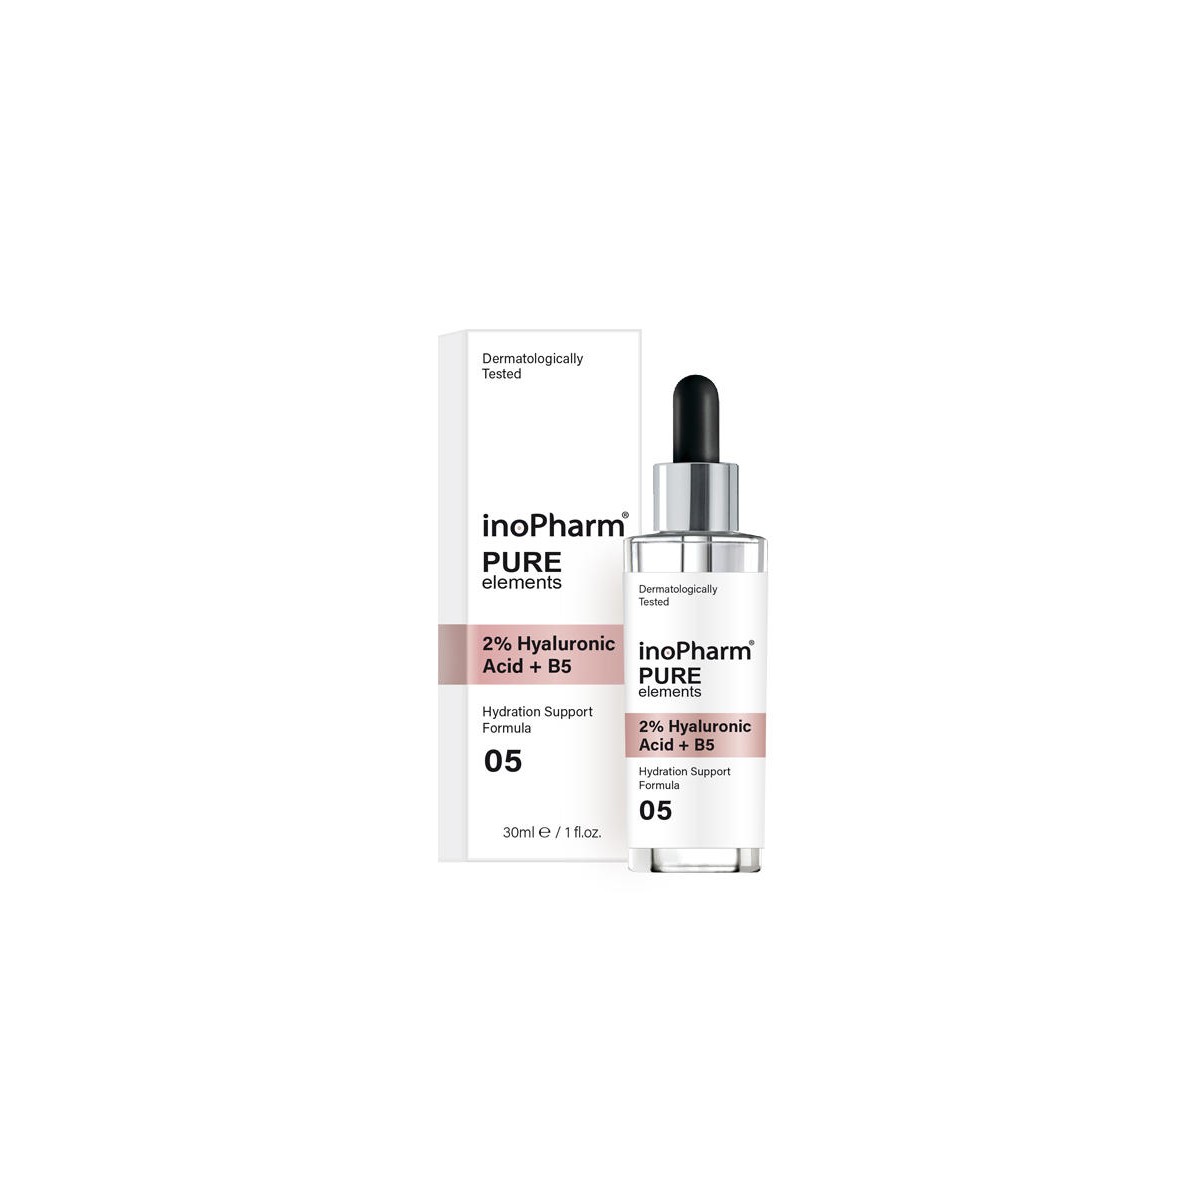 Facial - Cosmética Natural al mejor precio: InoPharm Pure Elements 2% Hyaluronic + B5 Serum de InoPharm en Skin Thinks - Piel Seca